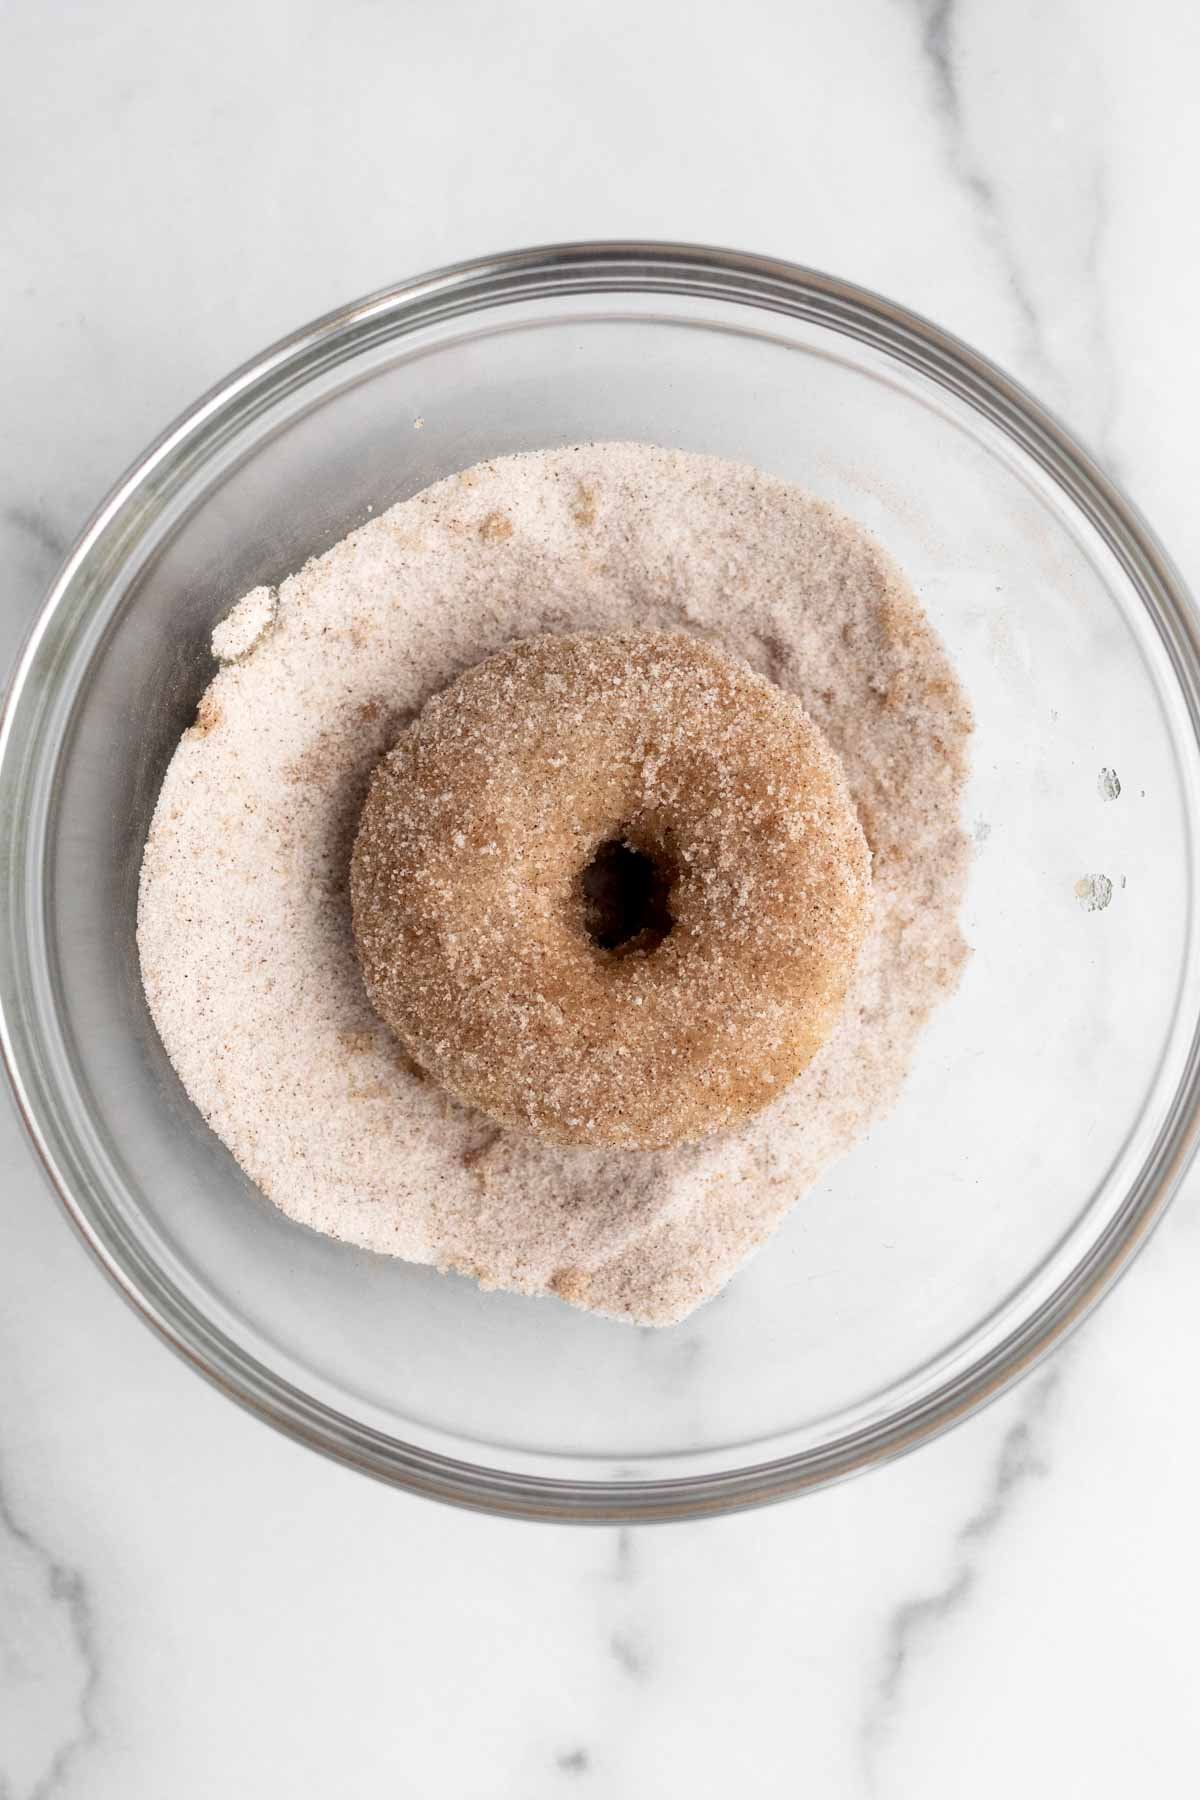 The donut taking a dust bath in the cinnamon sugar.